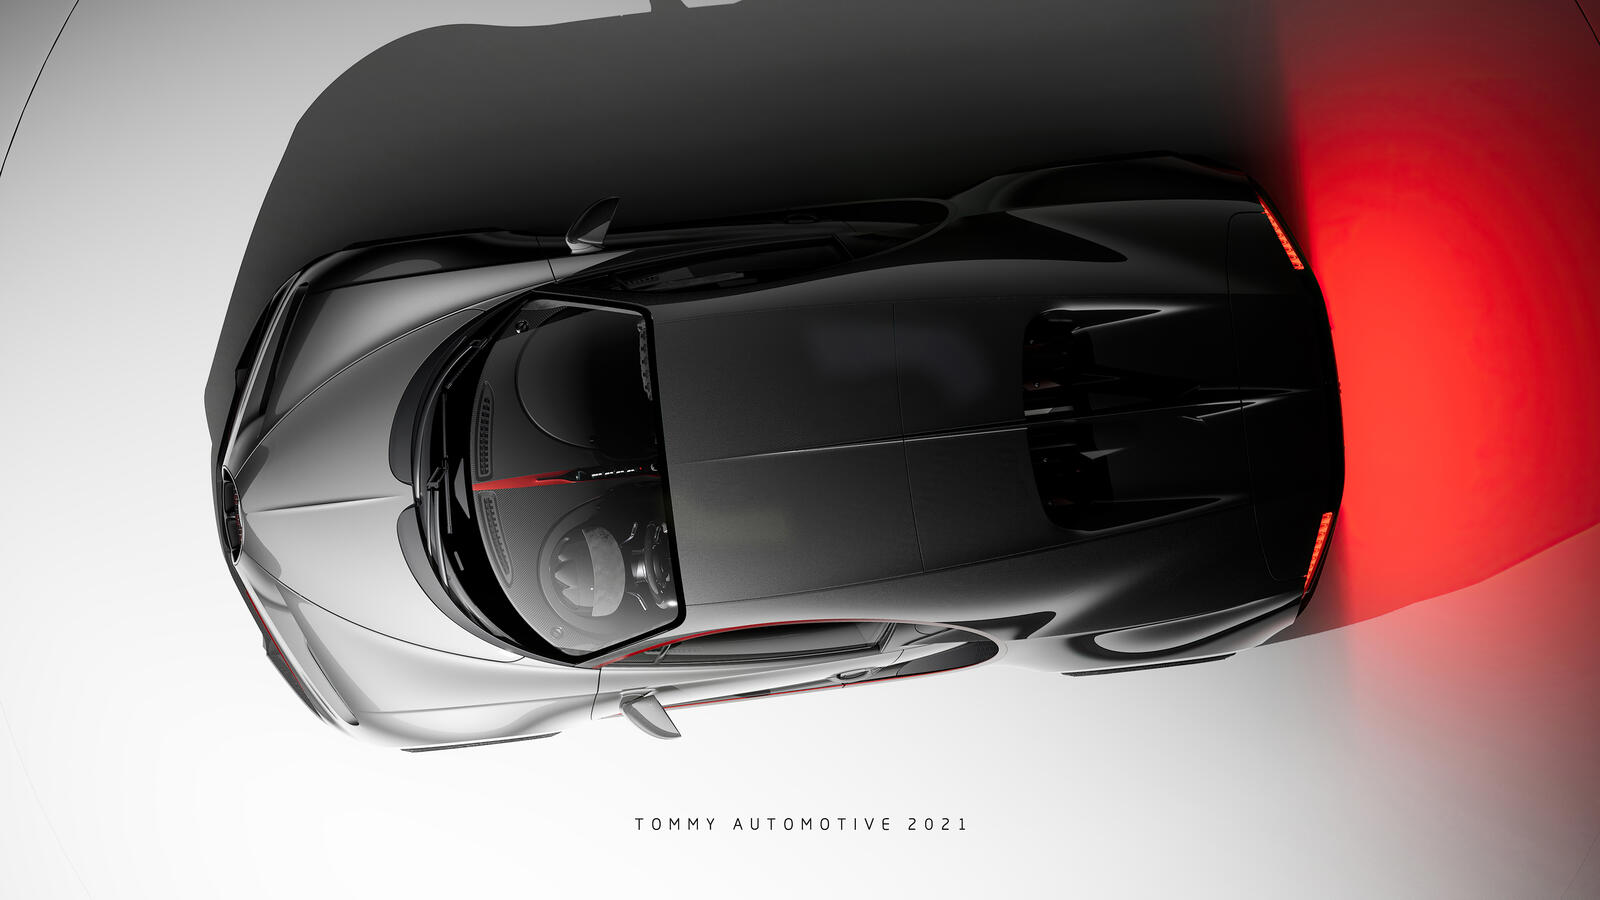 Wallpapers Behance Bugatti cars on the desktop